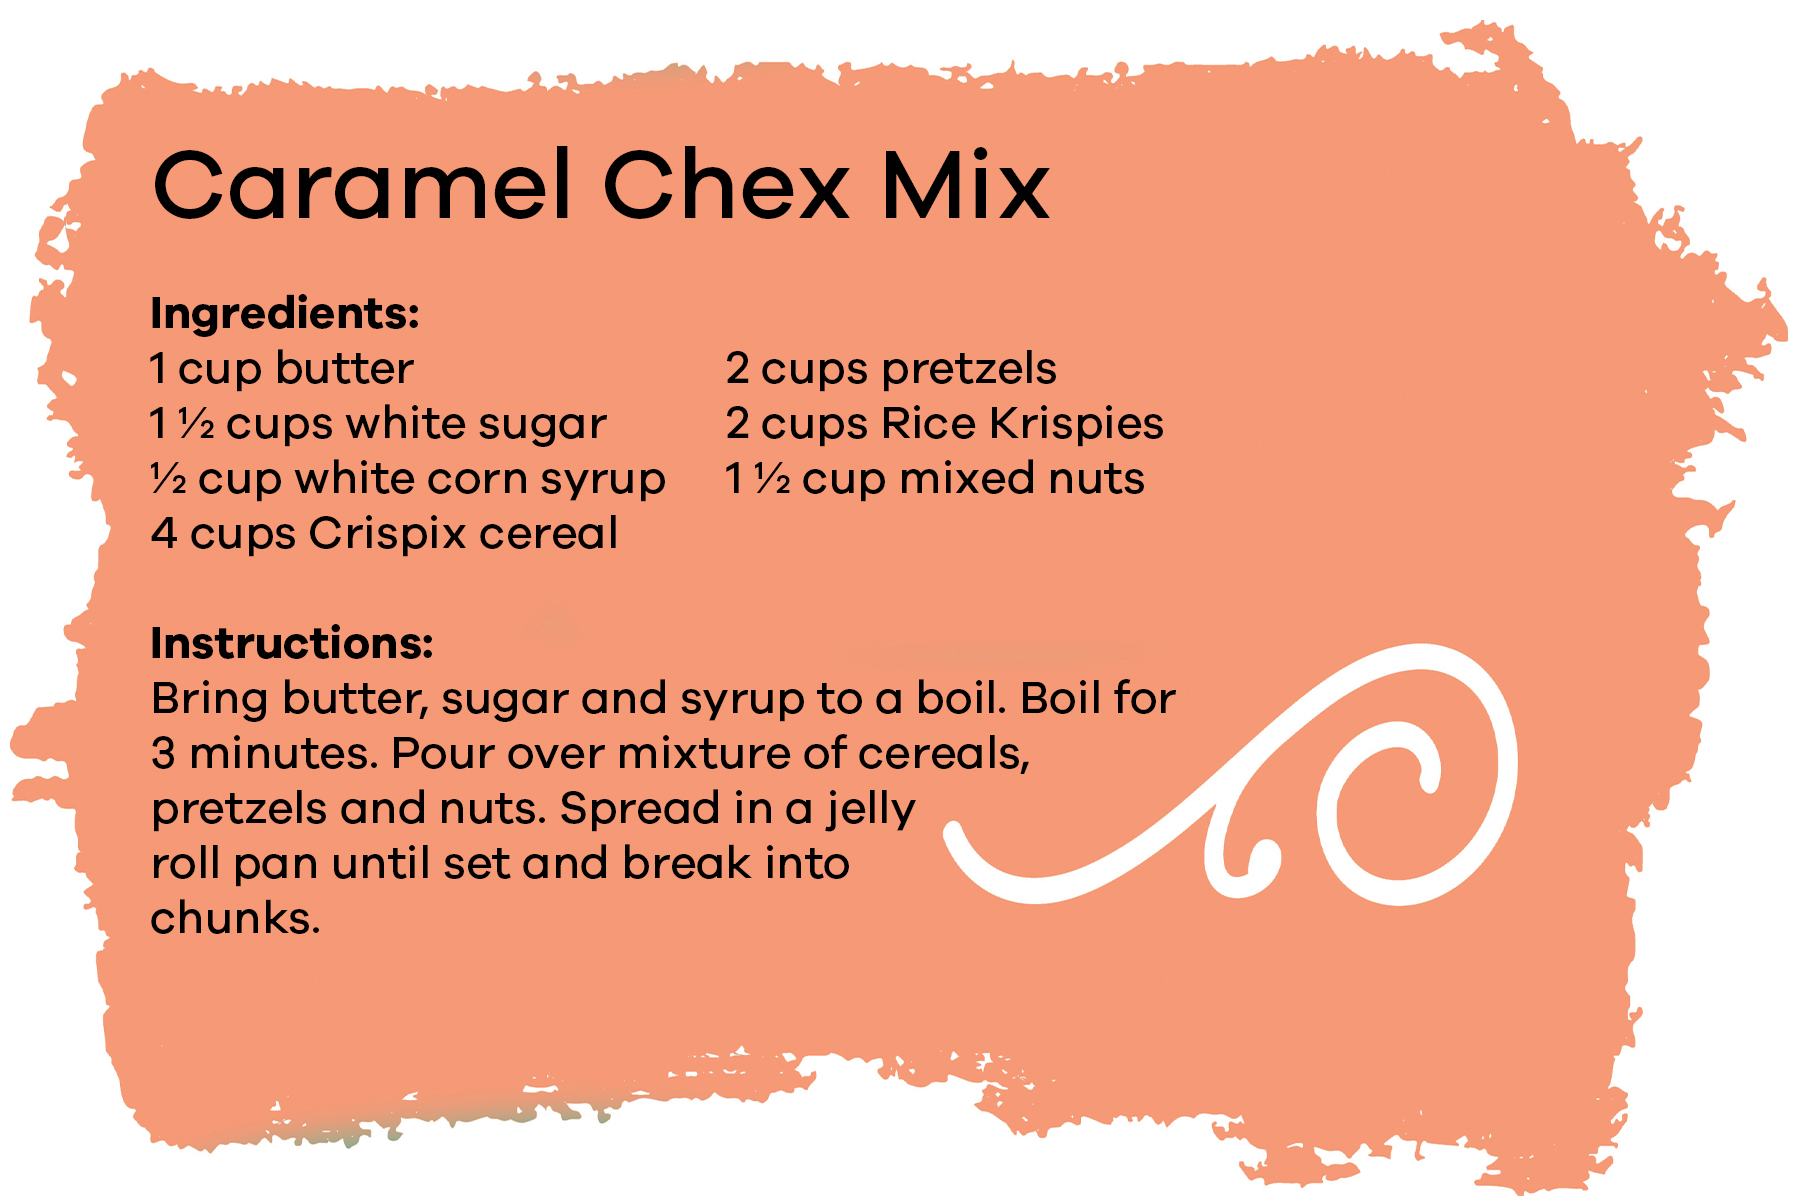 Caramel Chex Mix recipe card